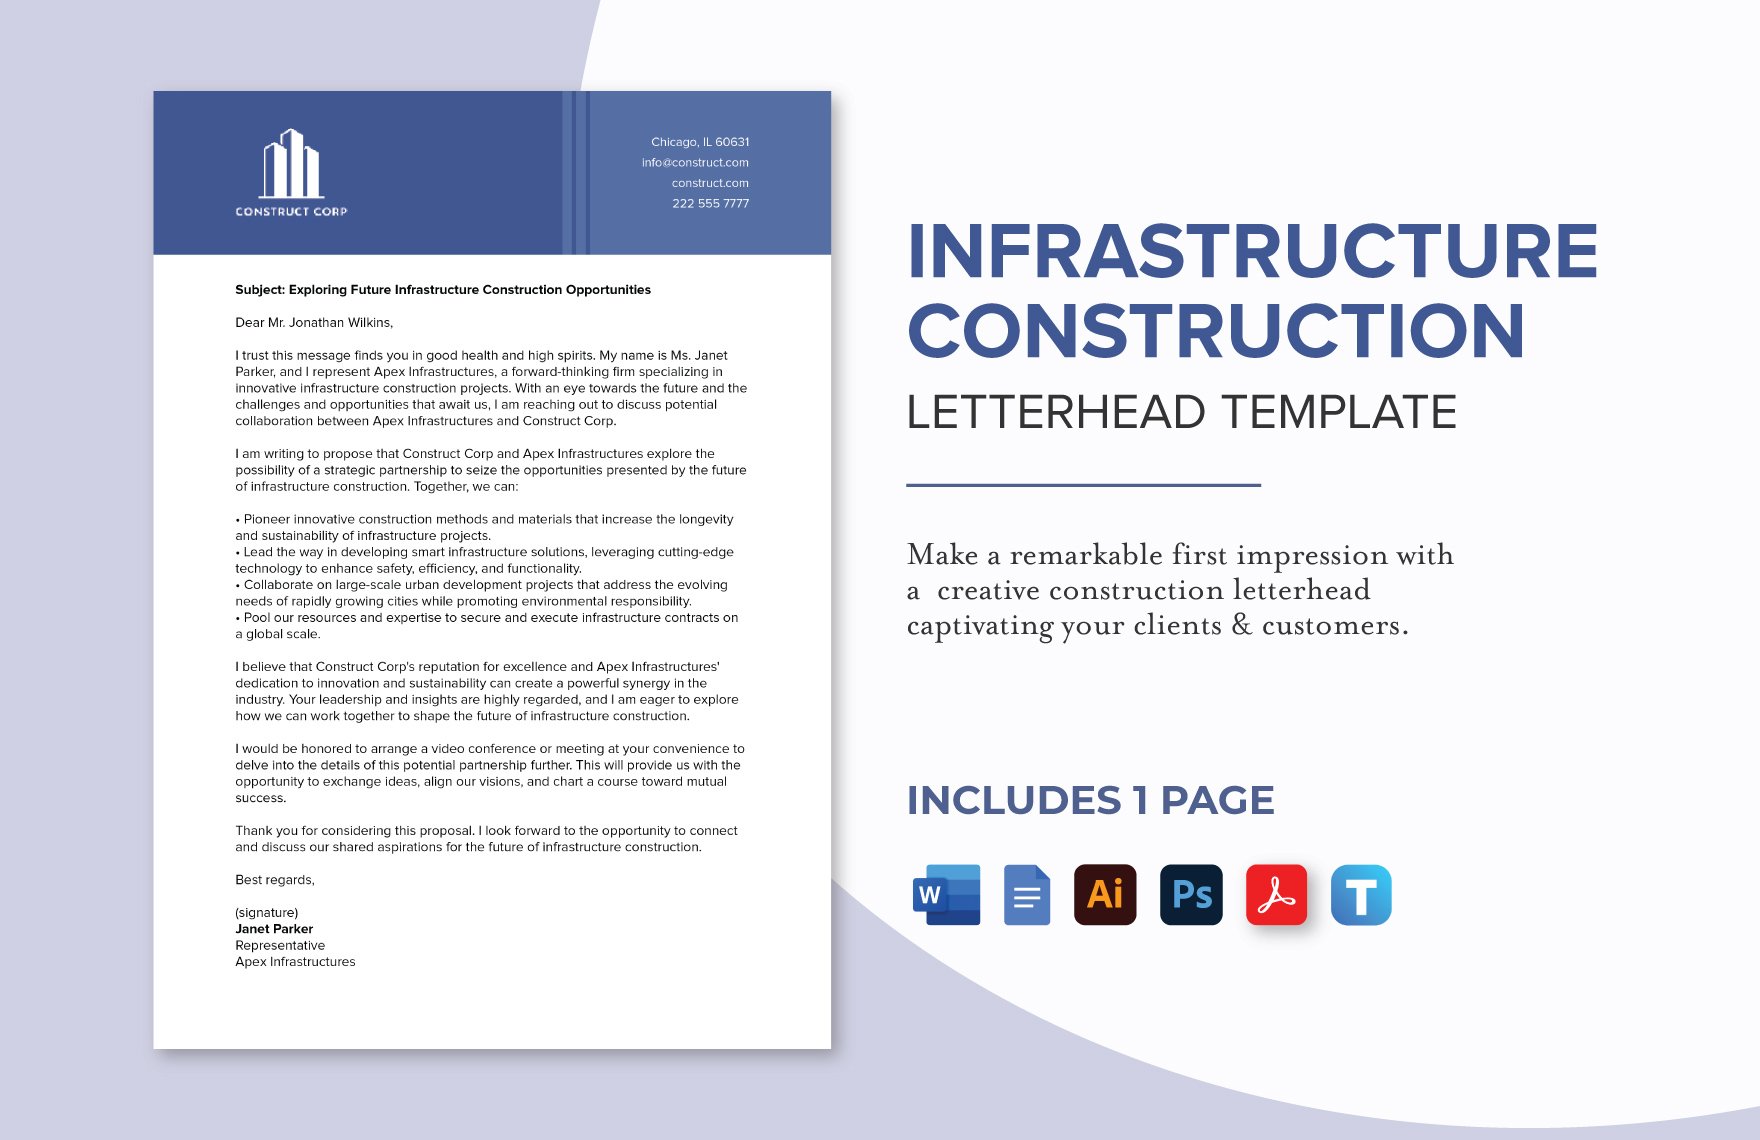 Infrastructure Construction Letterhead Template